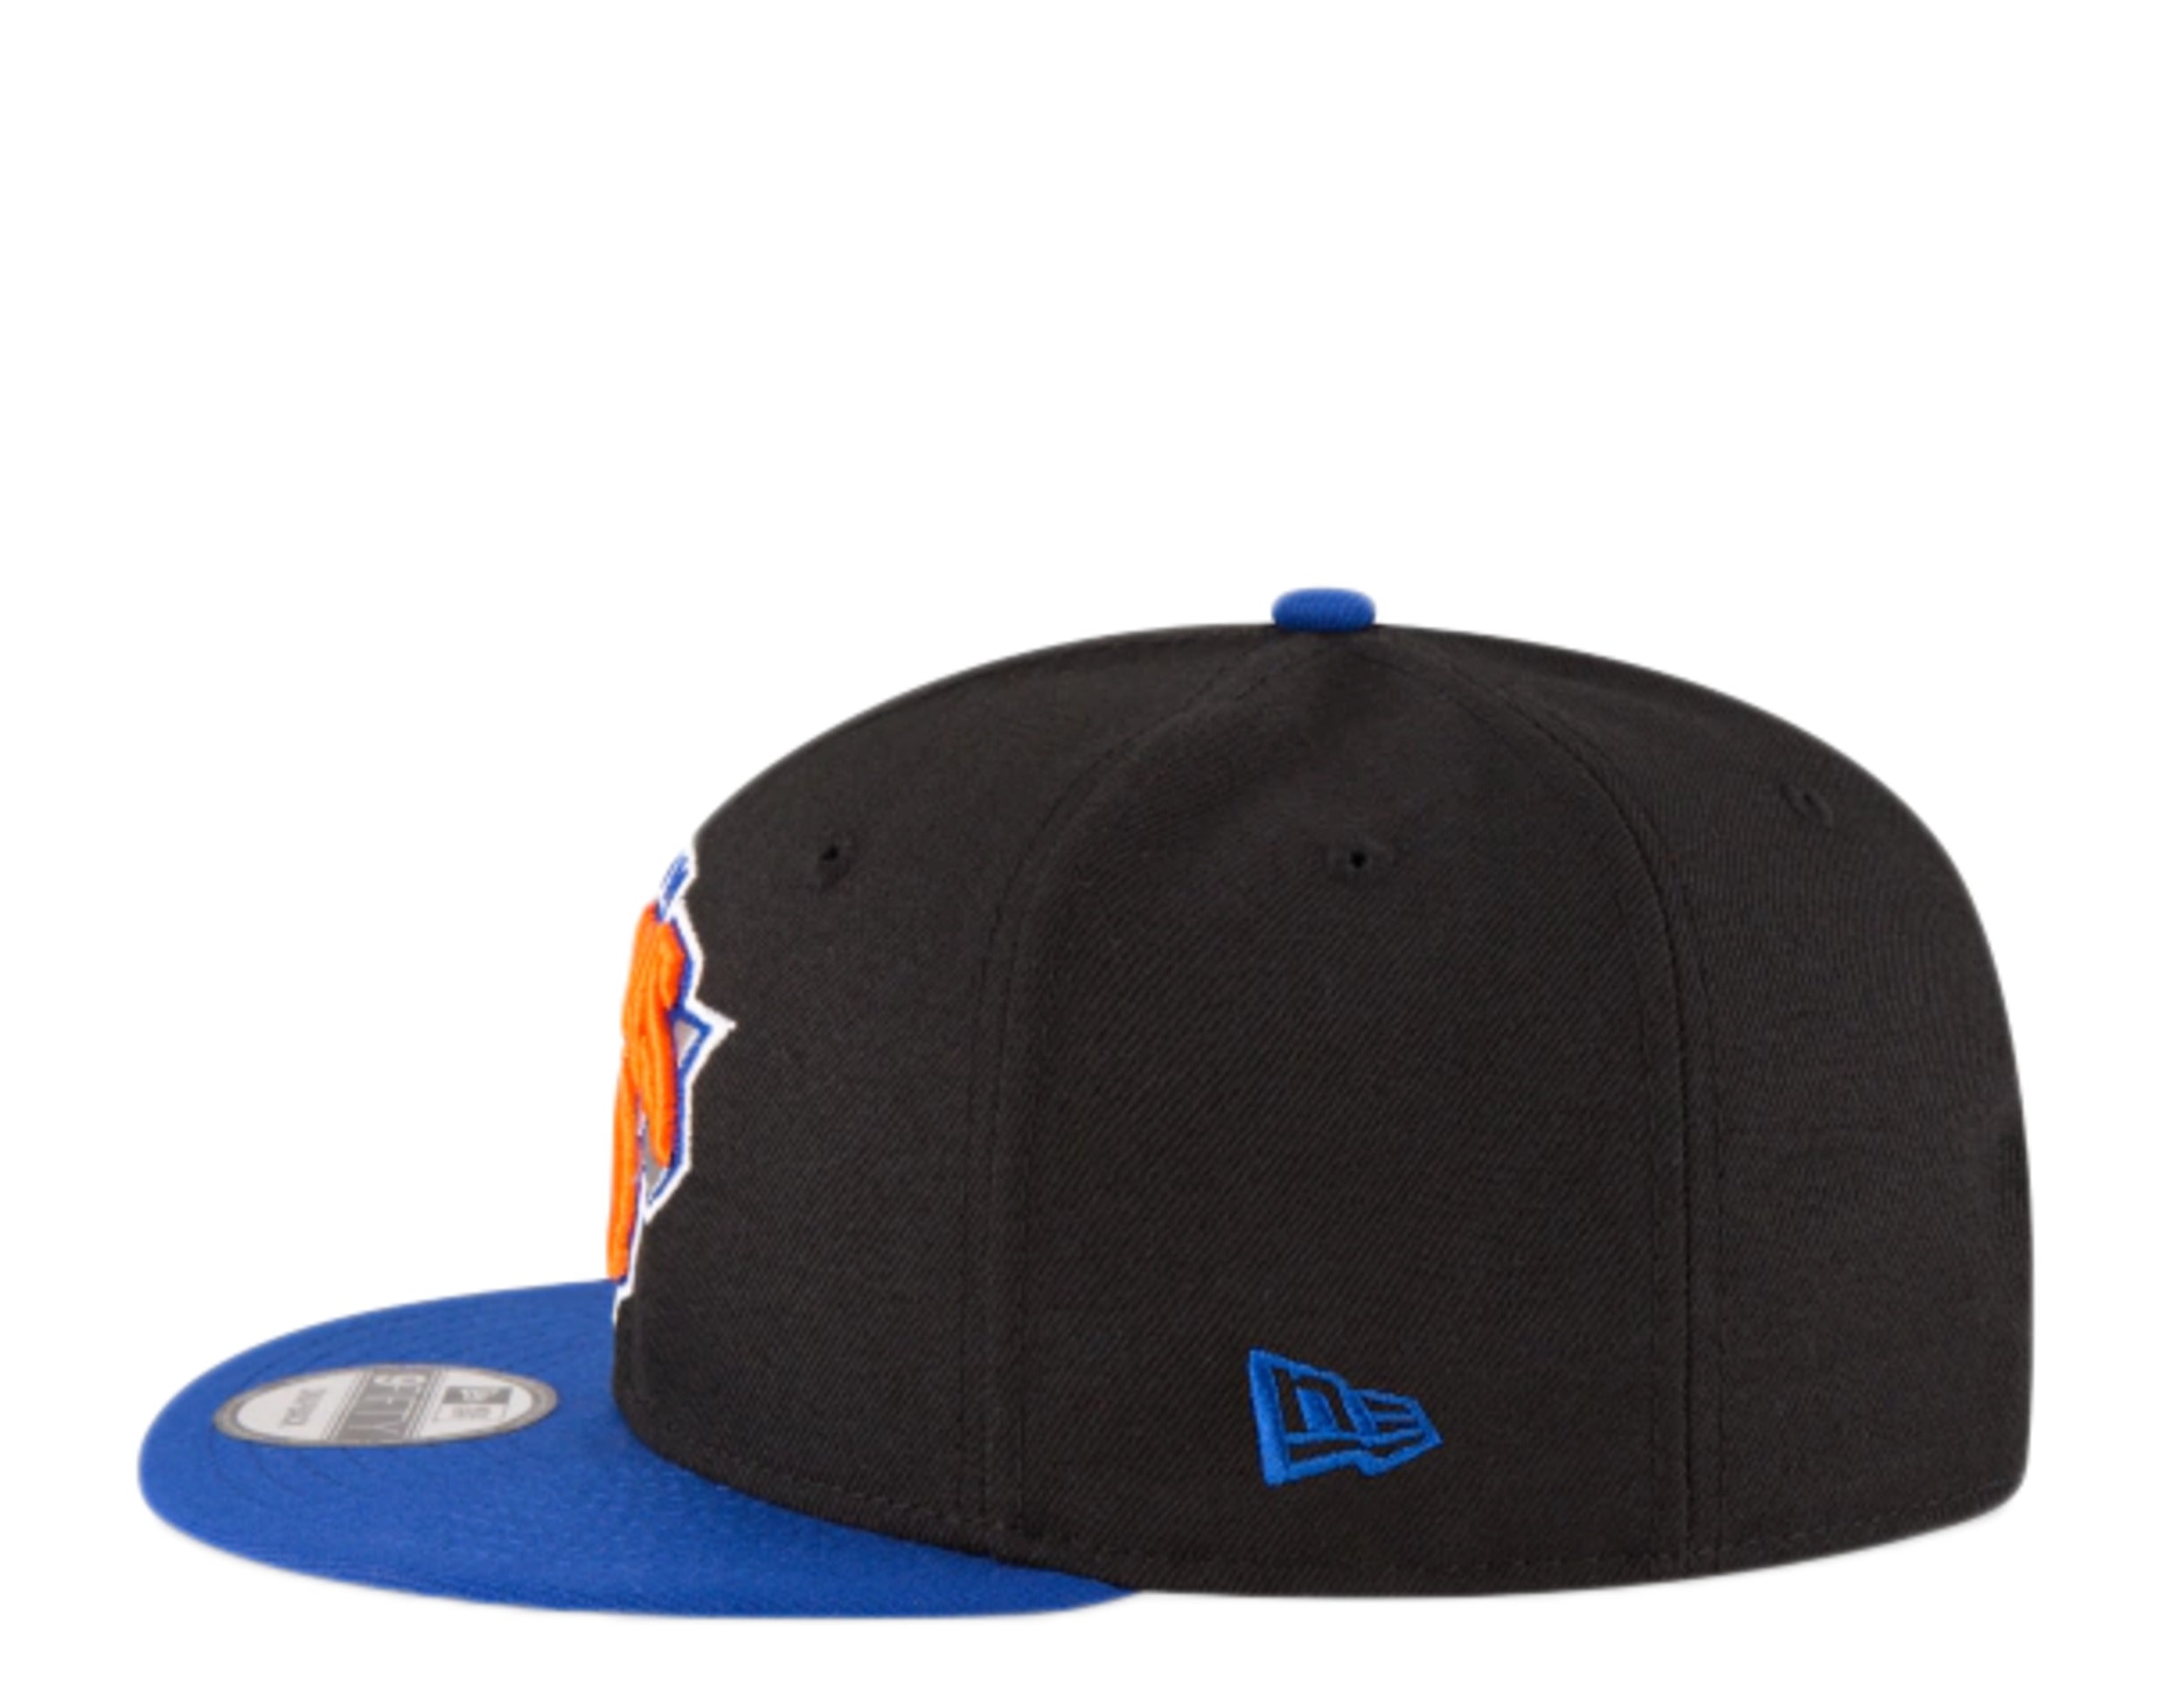 New Era 9FIFTY NBA New York Knicks 2-Tone Snapback Hat